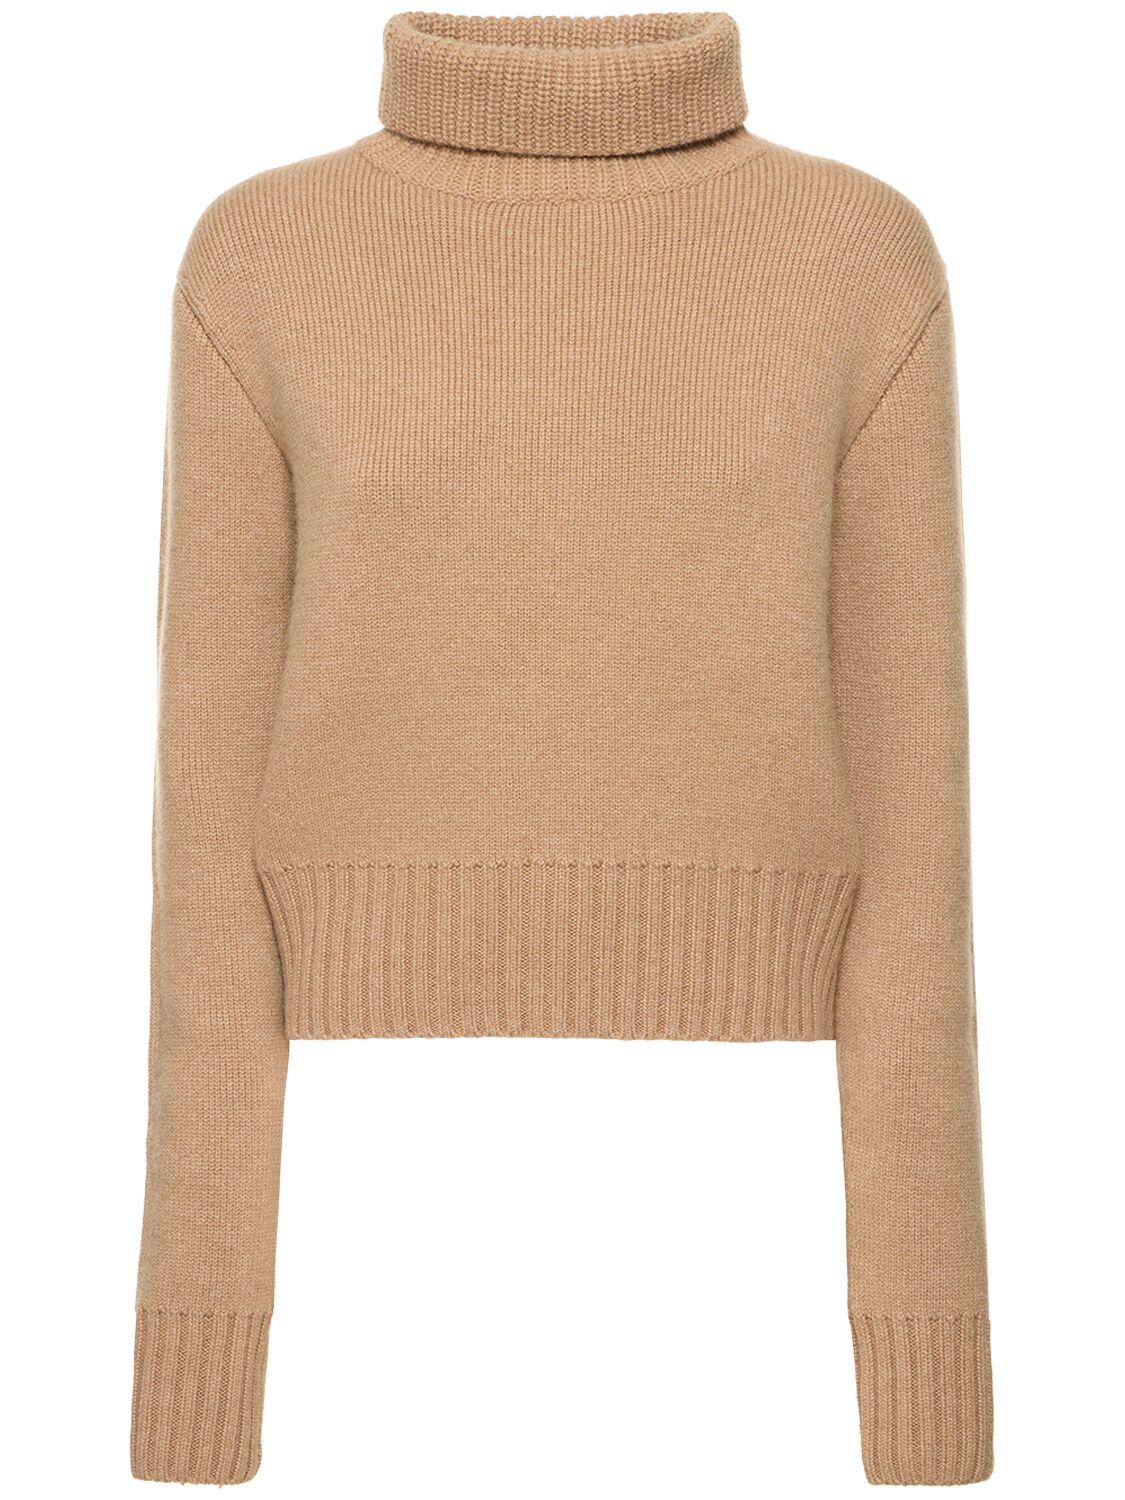 Image of Jovie Cashmere Turtleneck Sweater